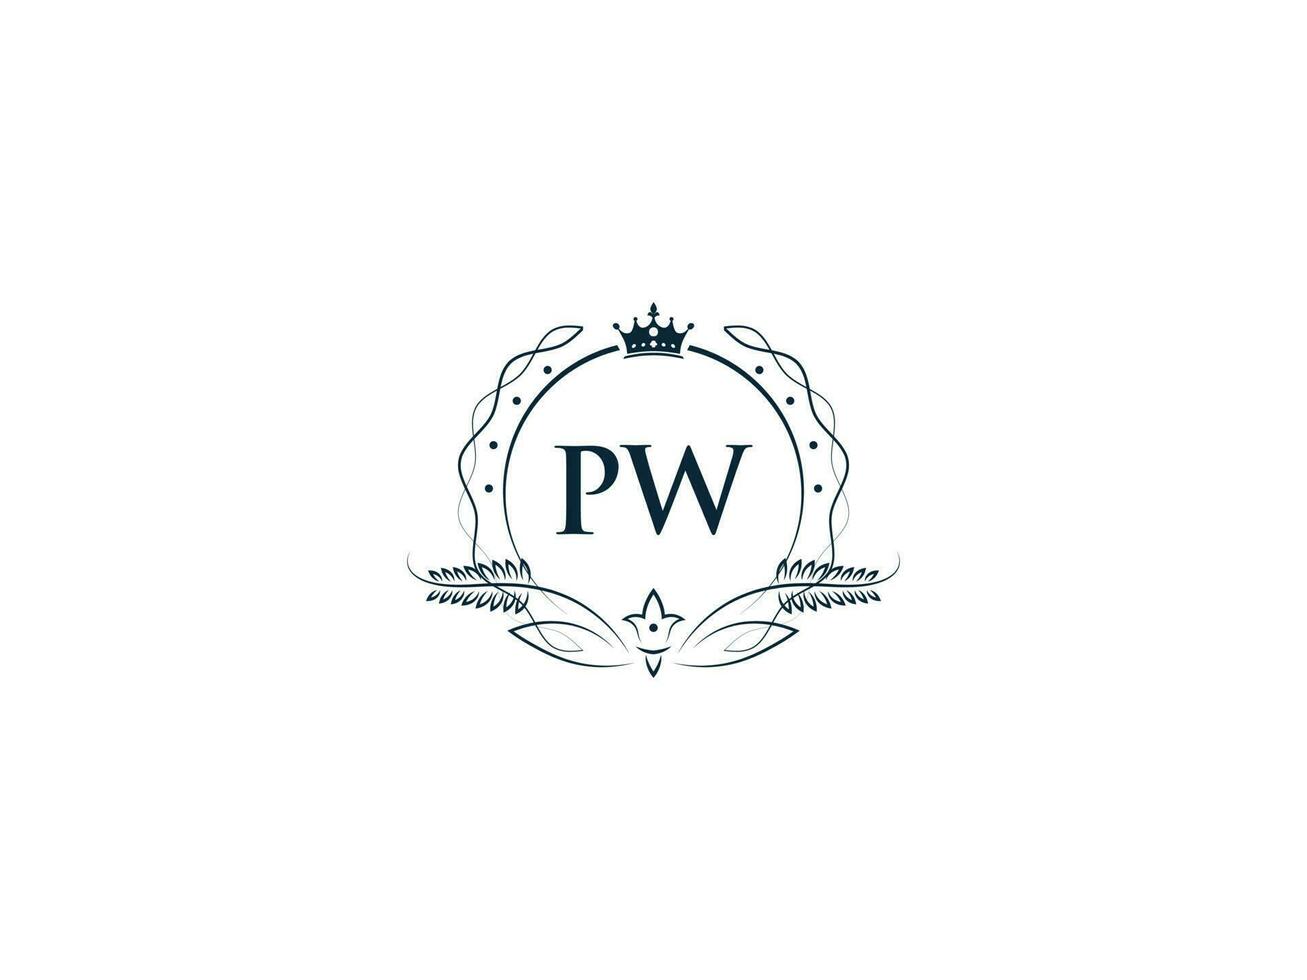 Minimalist Pw Logo Icon, Creative Pw wp Luxury Crown Letter Logo Design vector